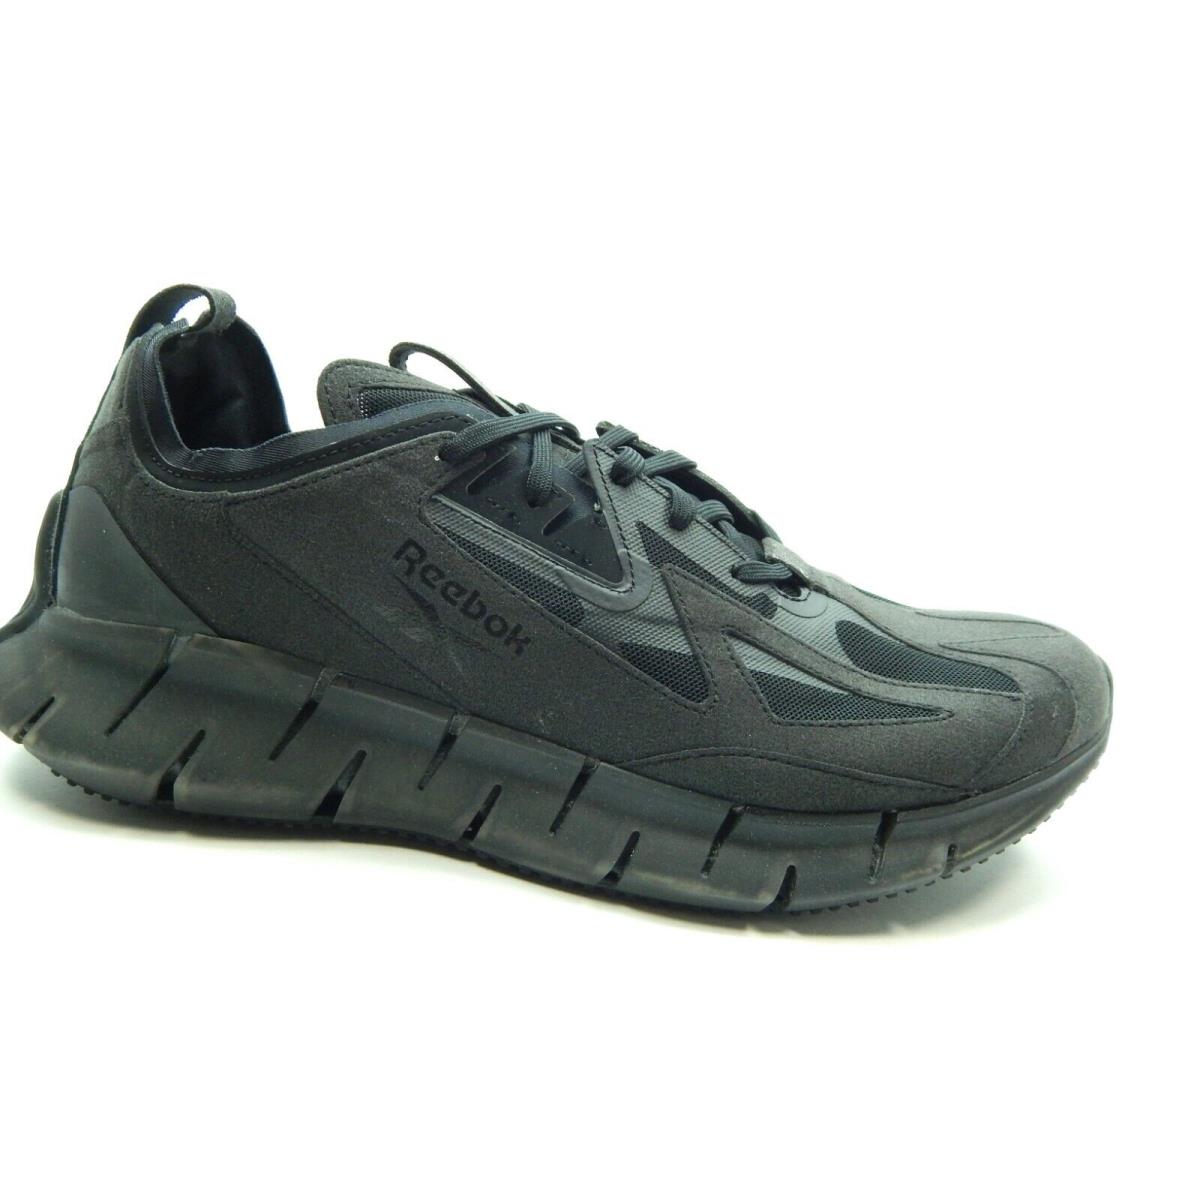 Reebok Black Zig Kinetica Concept Type FW5737 Men Shoes Size 9 - Gray